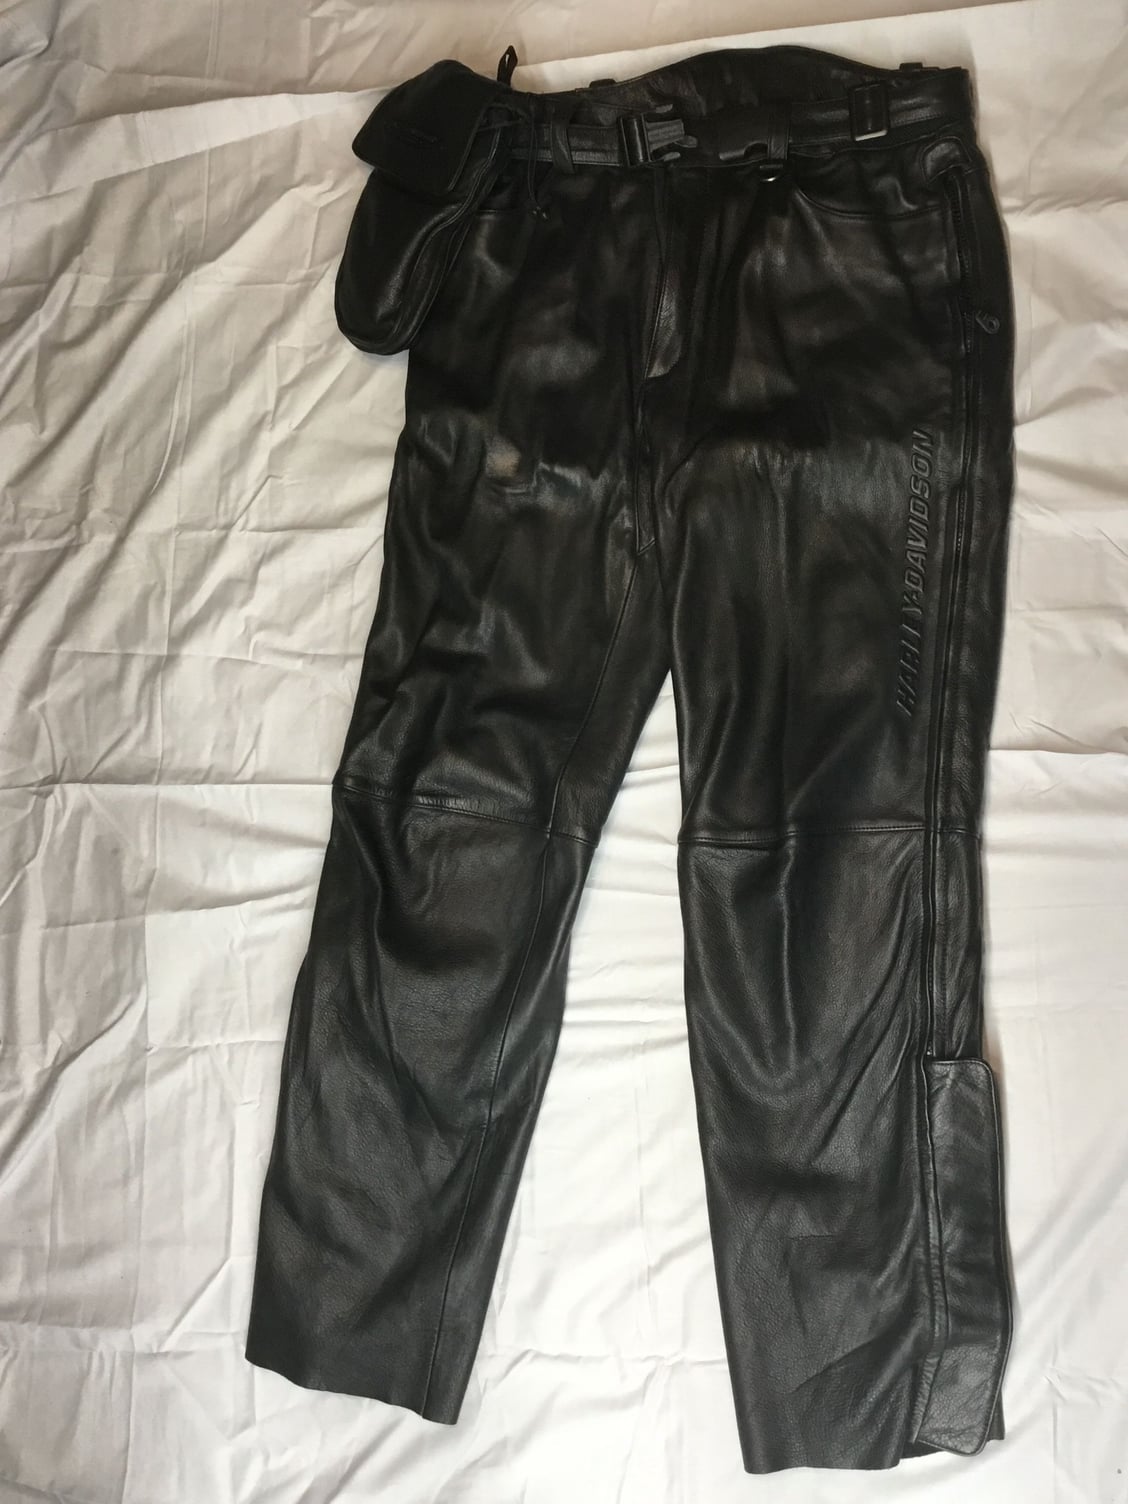 Men’s FXRG leather pants size 36 like NEW $275 - Harley Davidson Forums